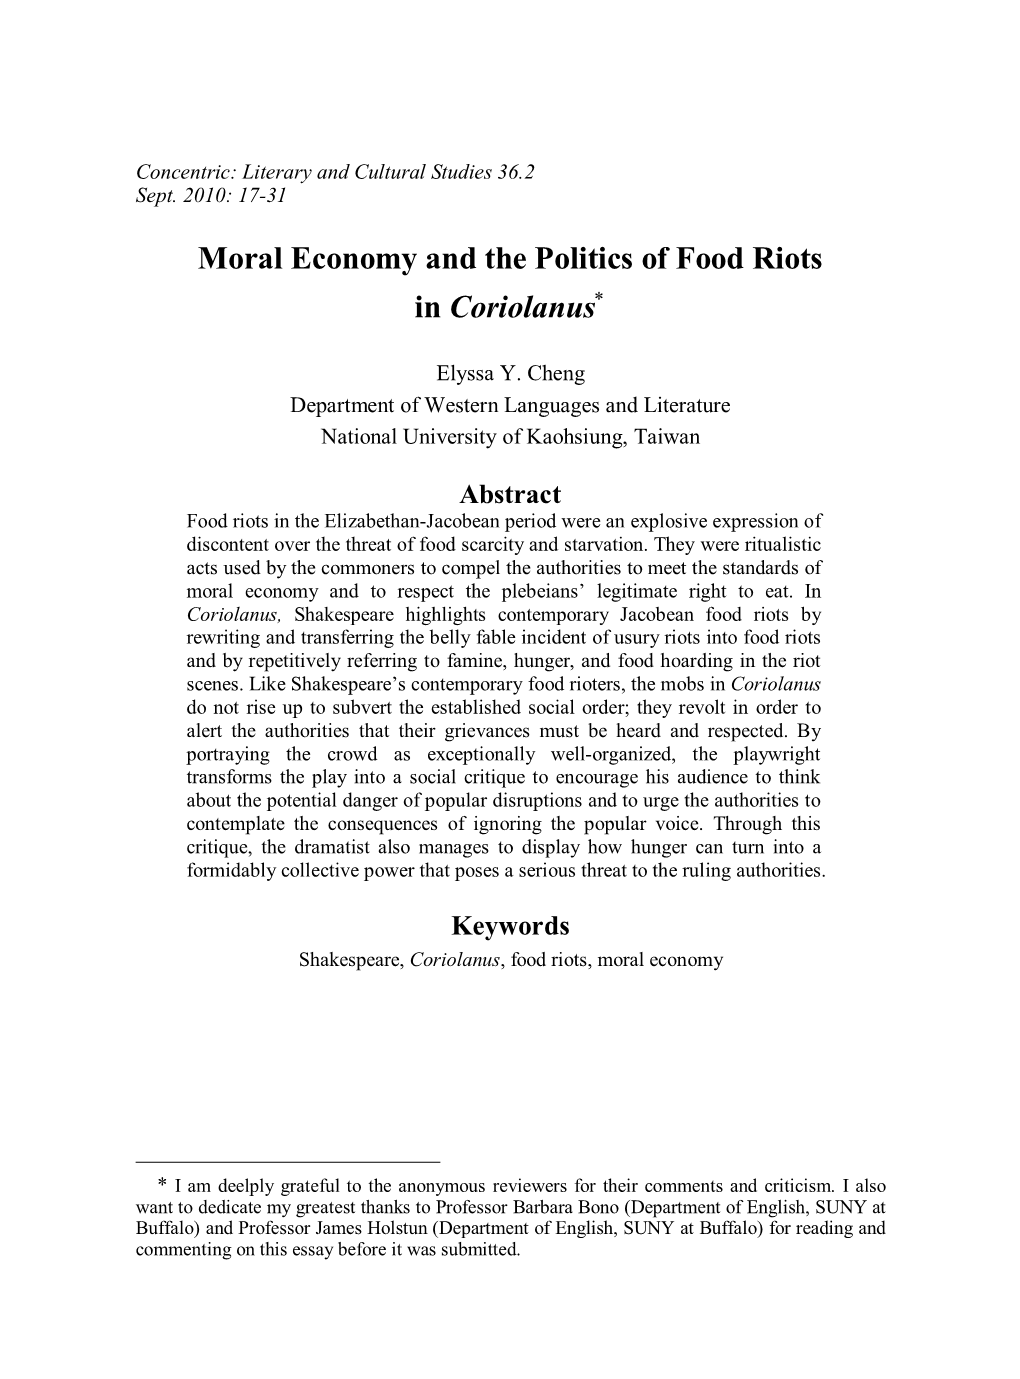 Moral Economy and the Politics of Food Riots in Coriolanus